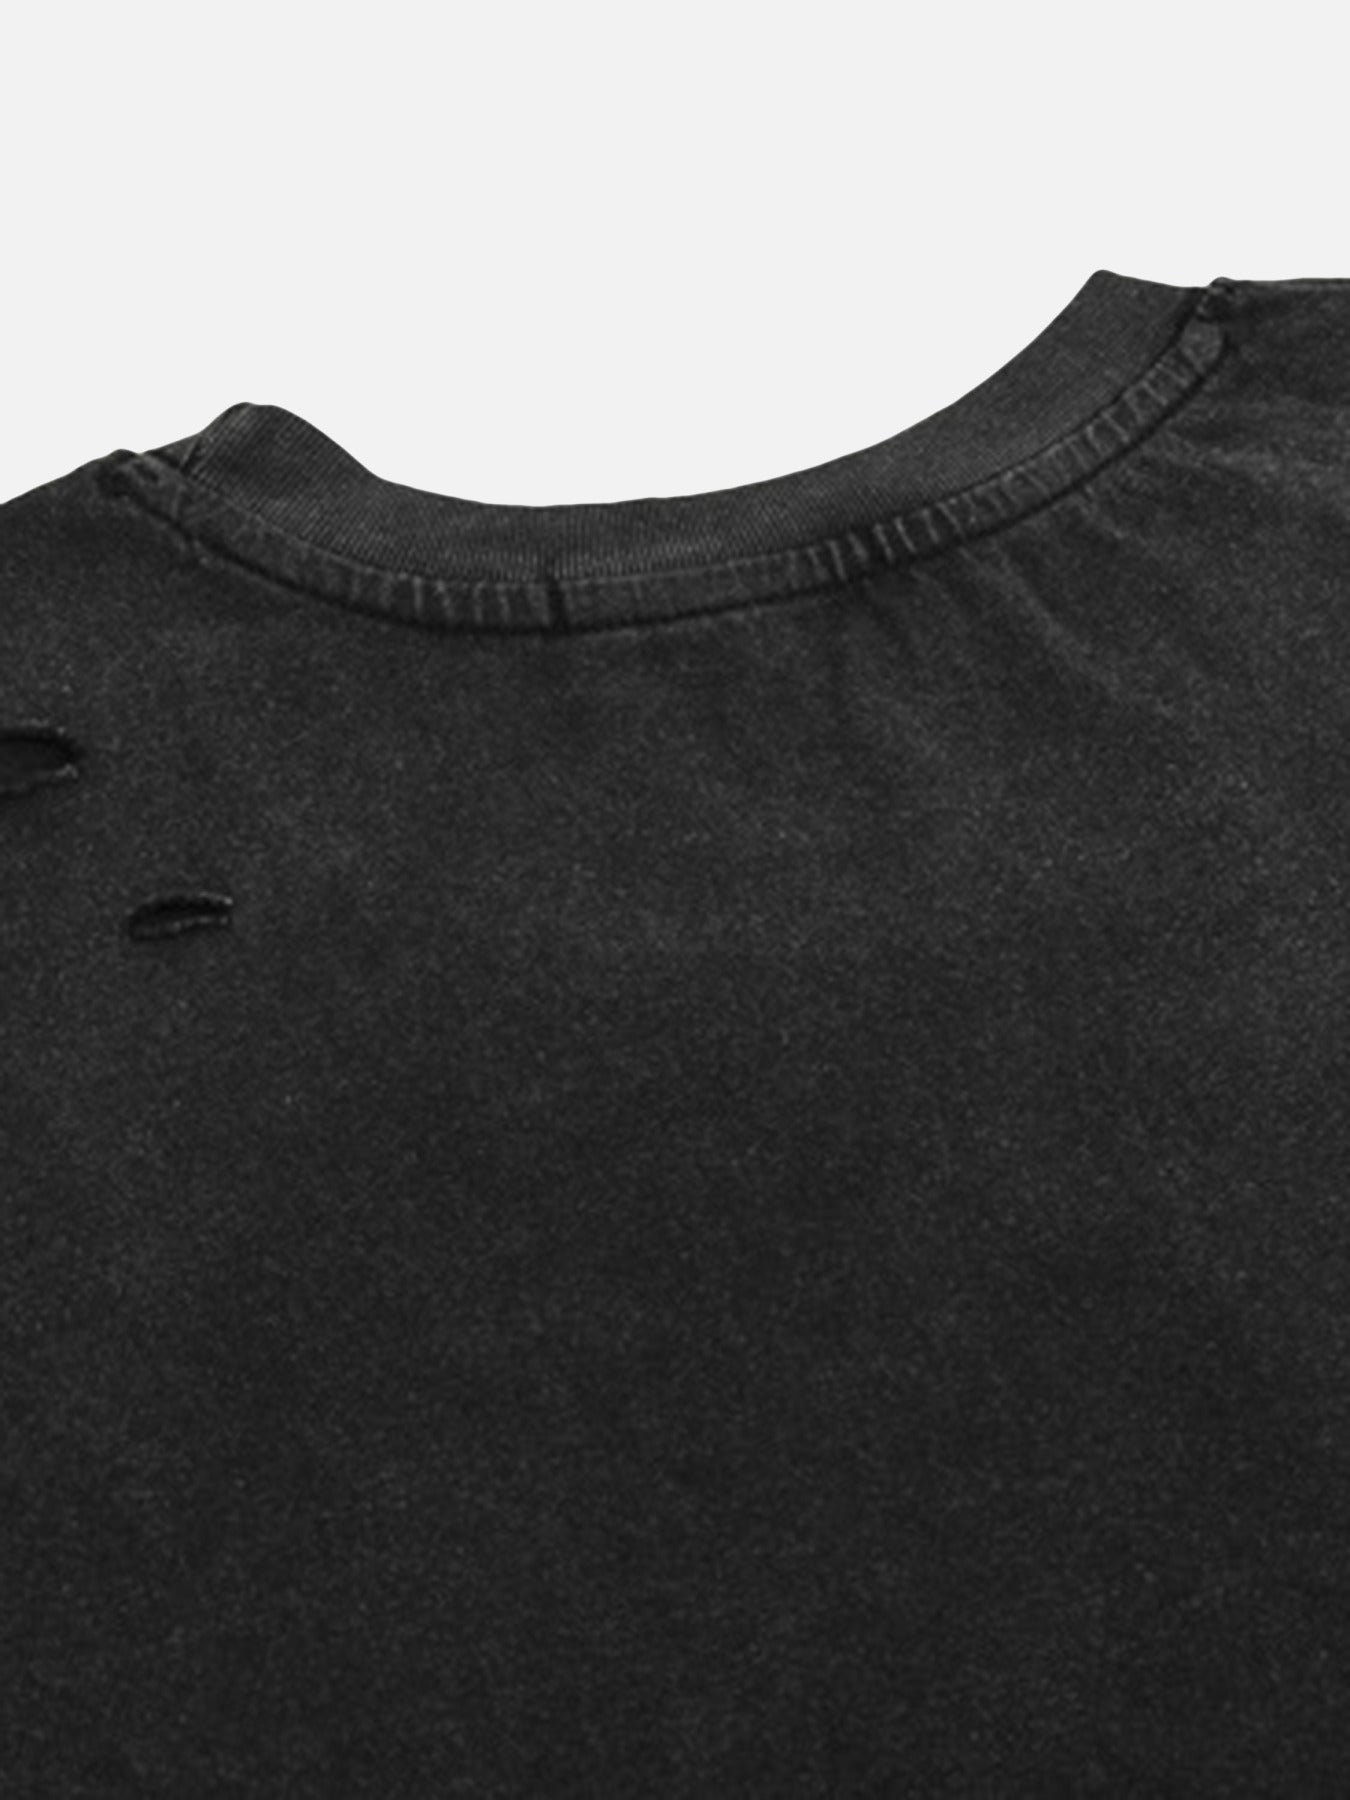 Thesupermade Vintage Sleeveless Vest - 1633